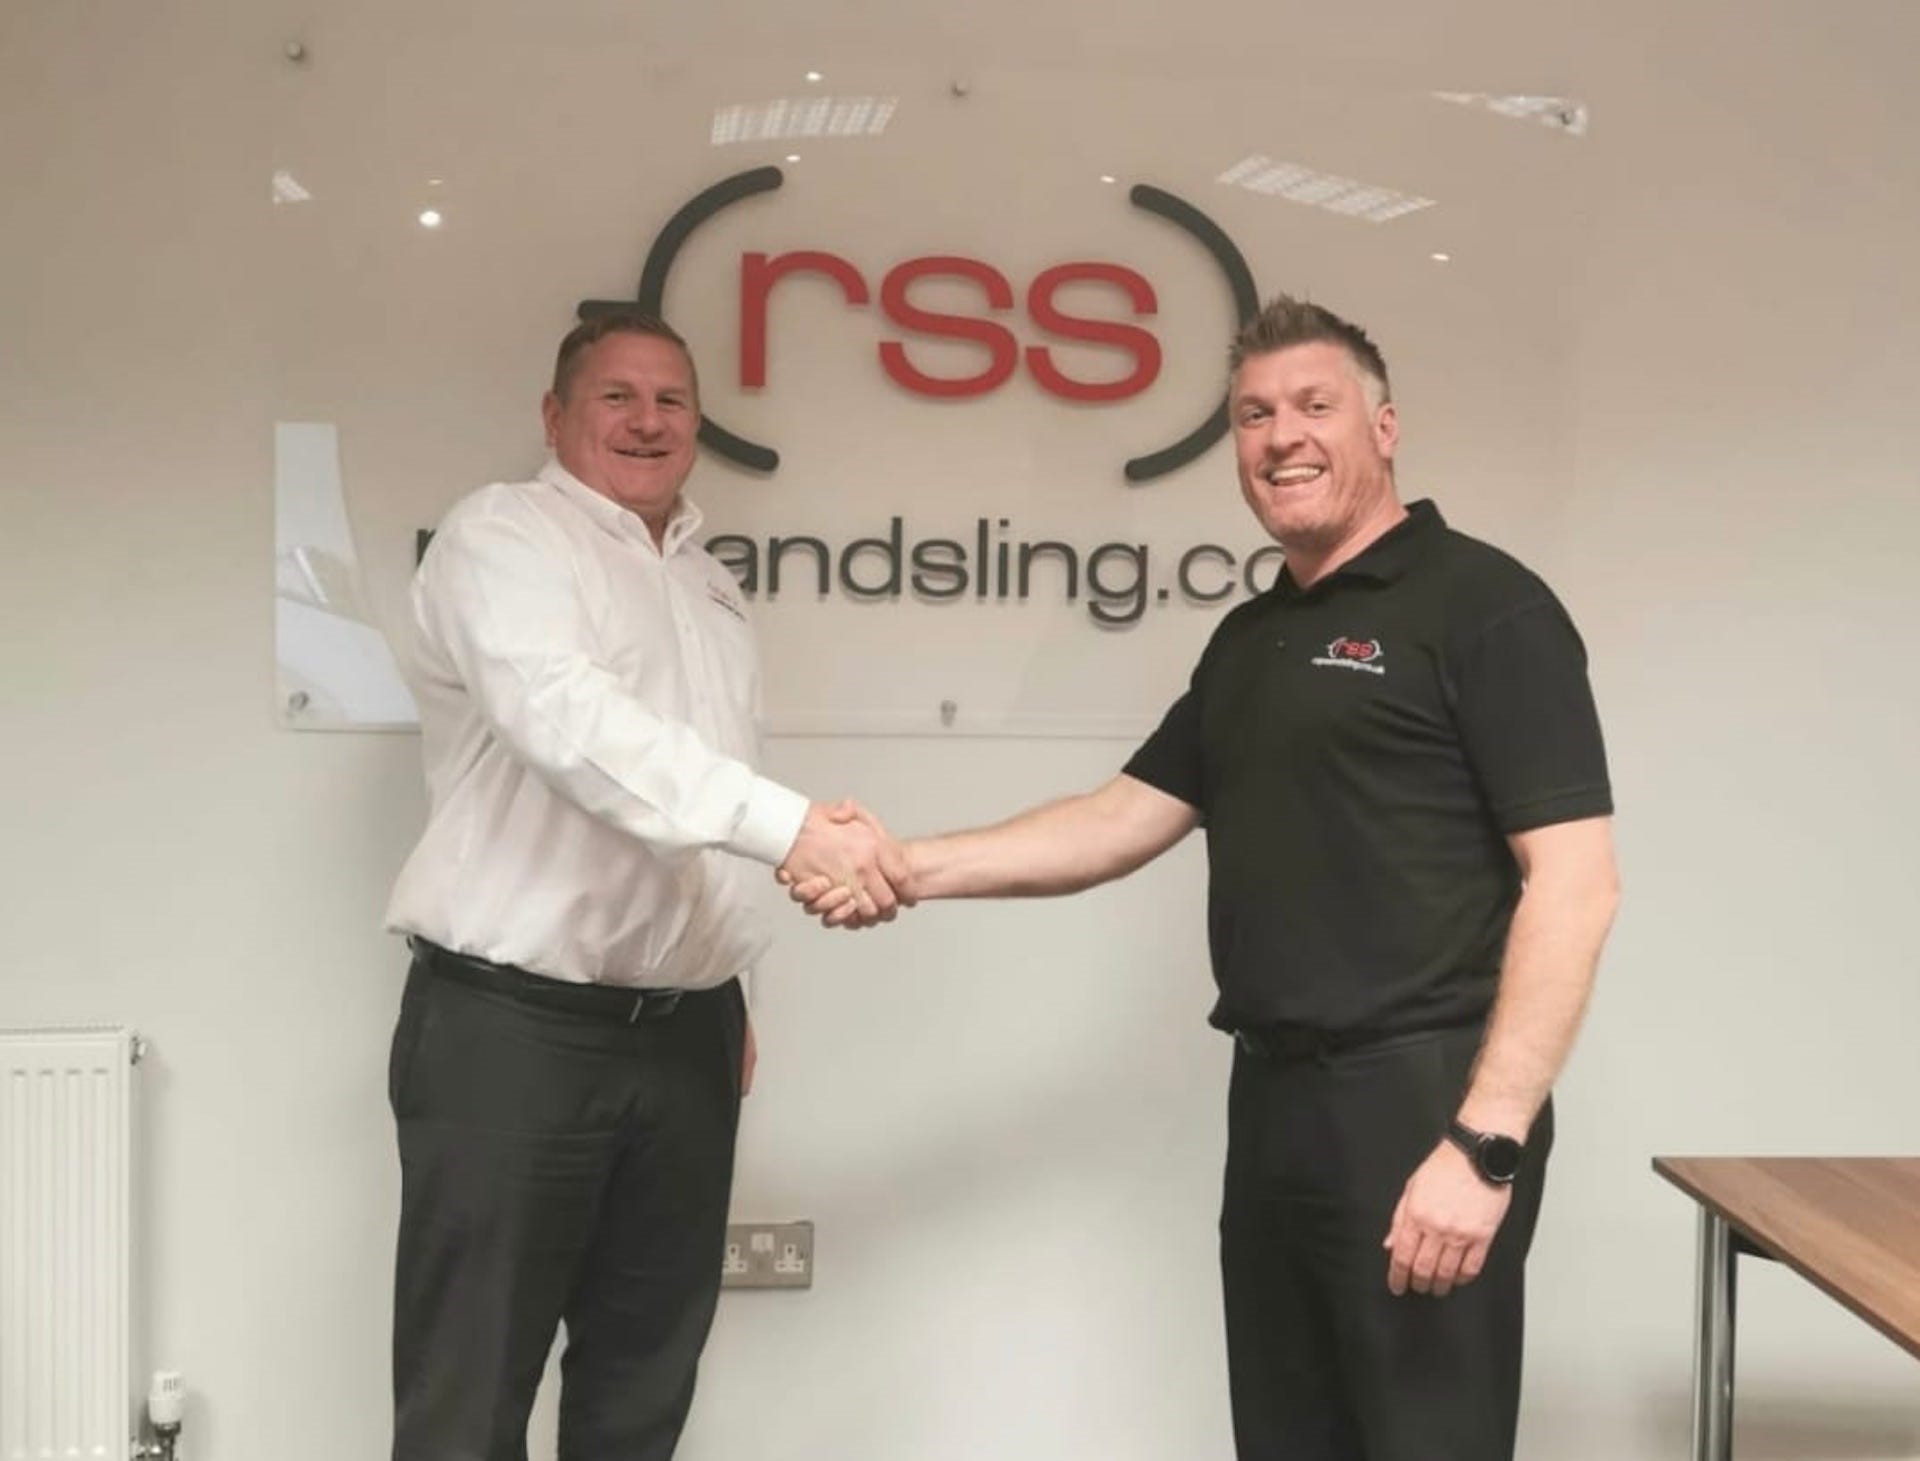 RSS Names Tony Teeder Director @ropeandsling